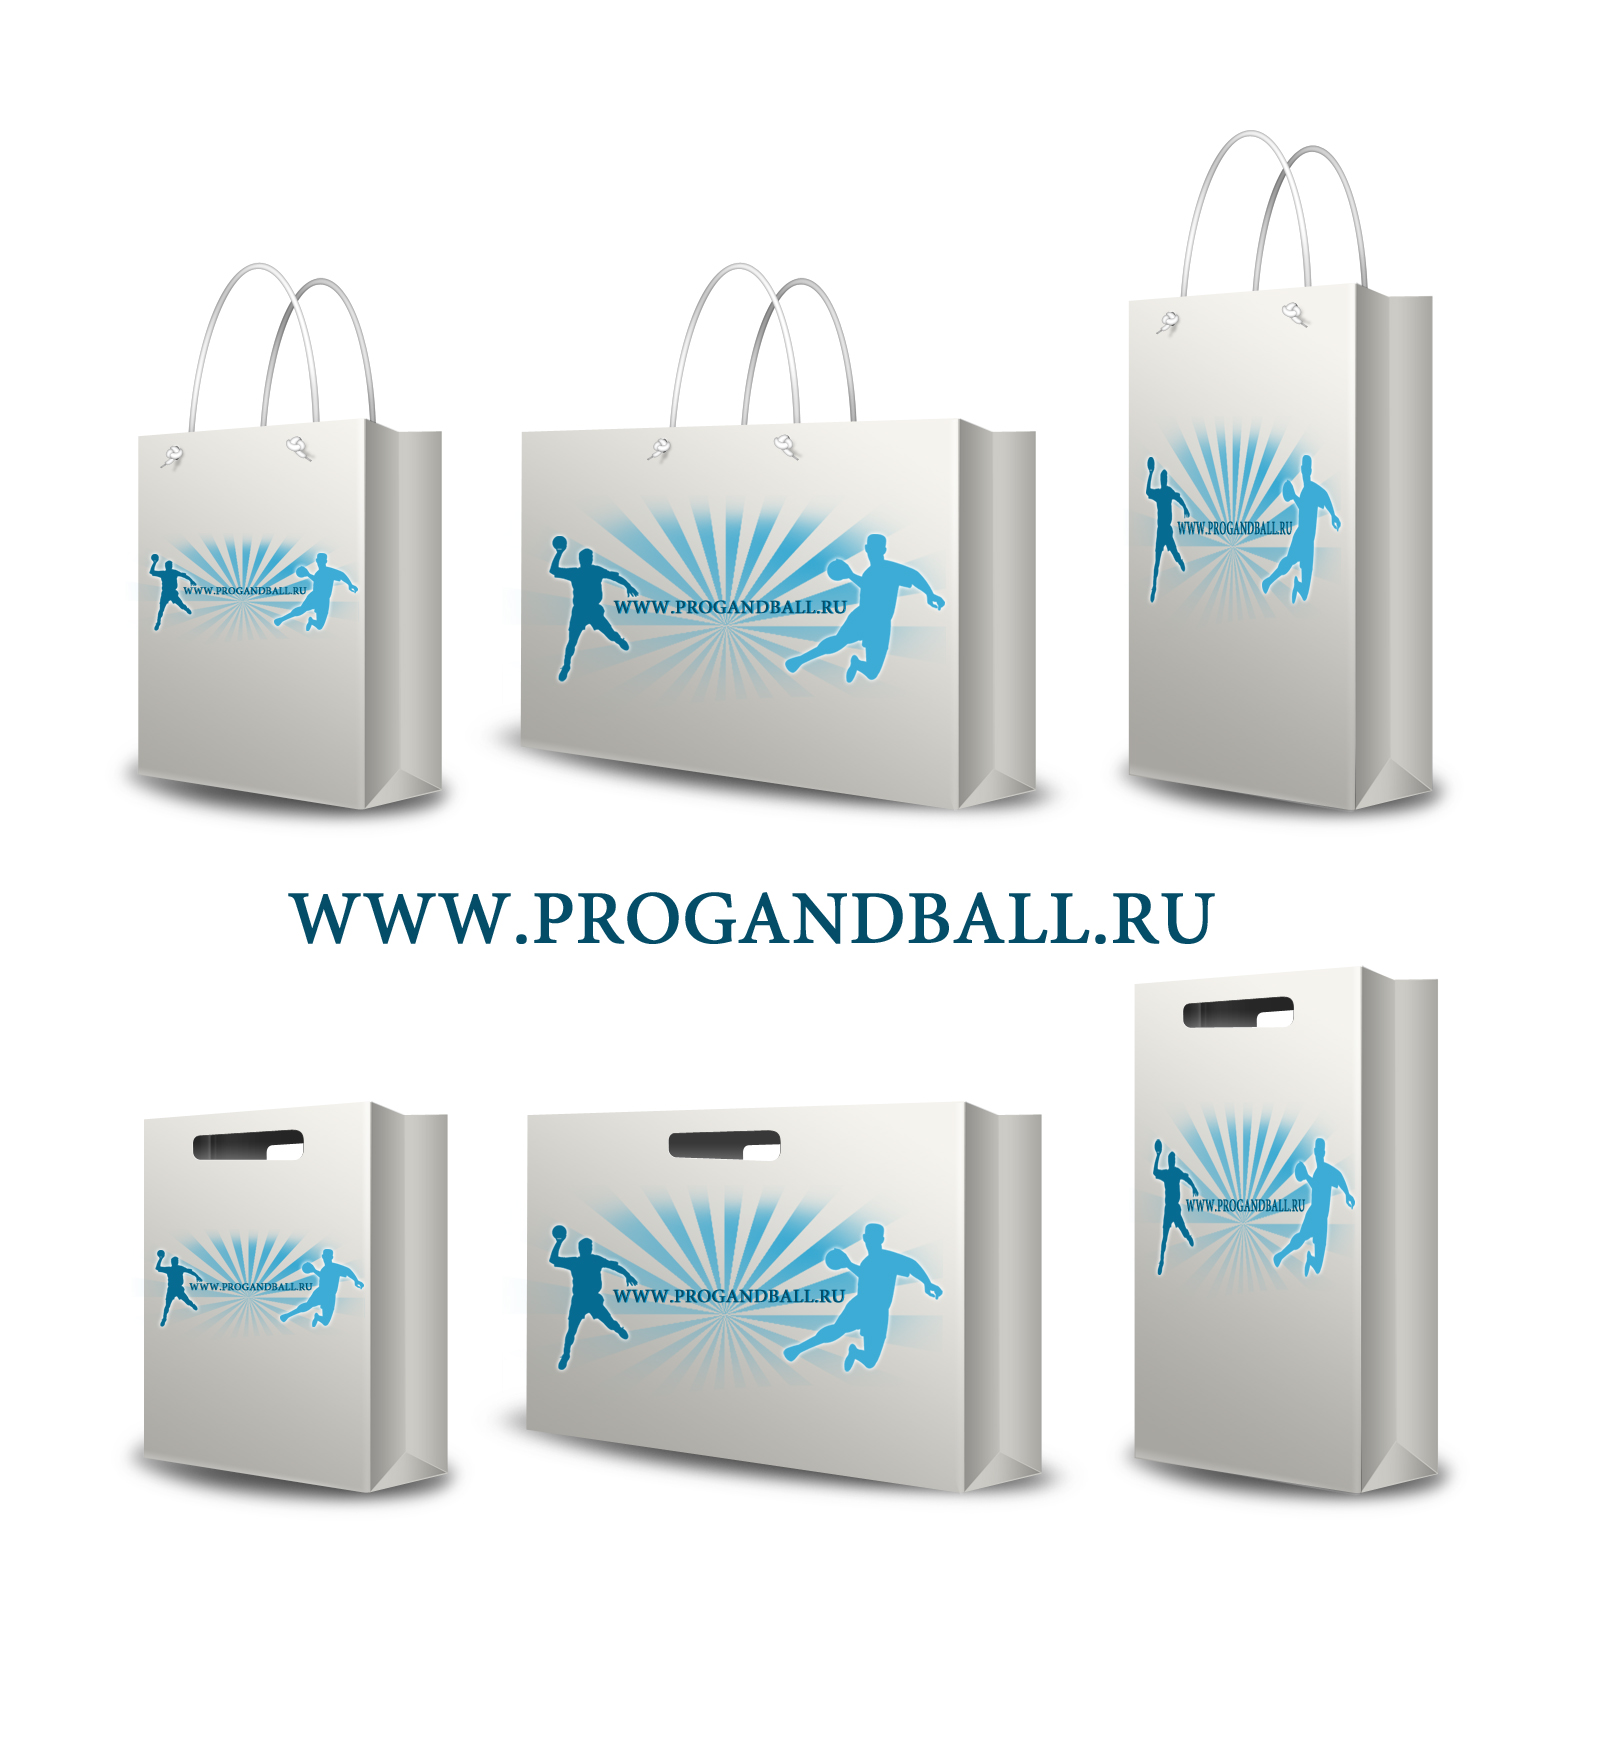 пакеты для prohandball.ru